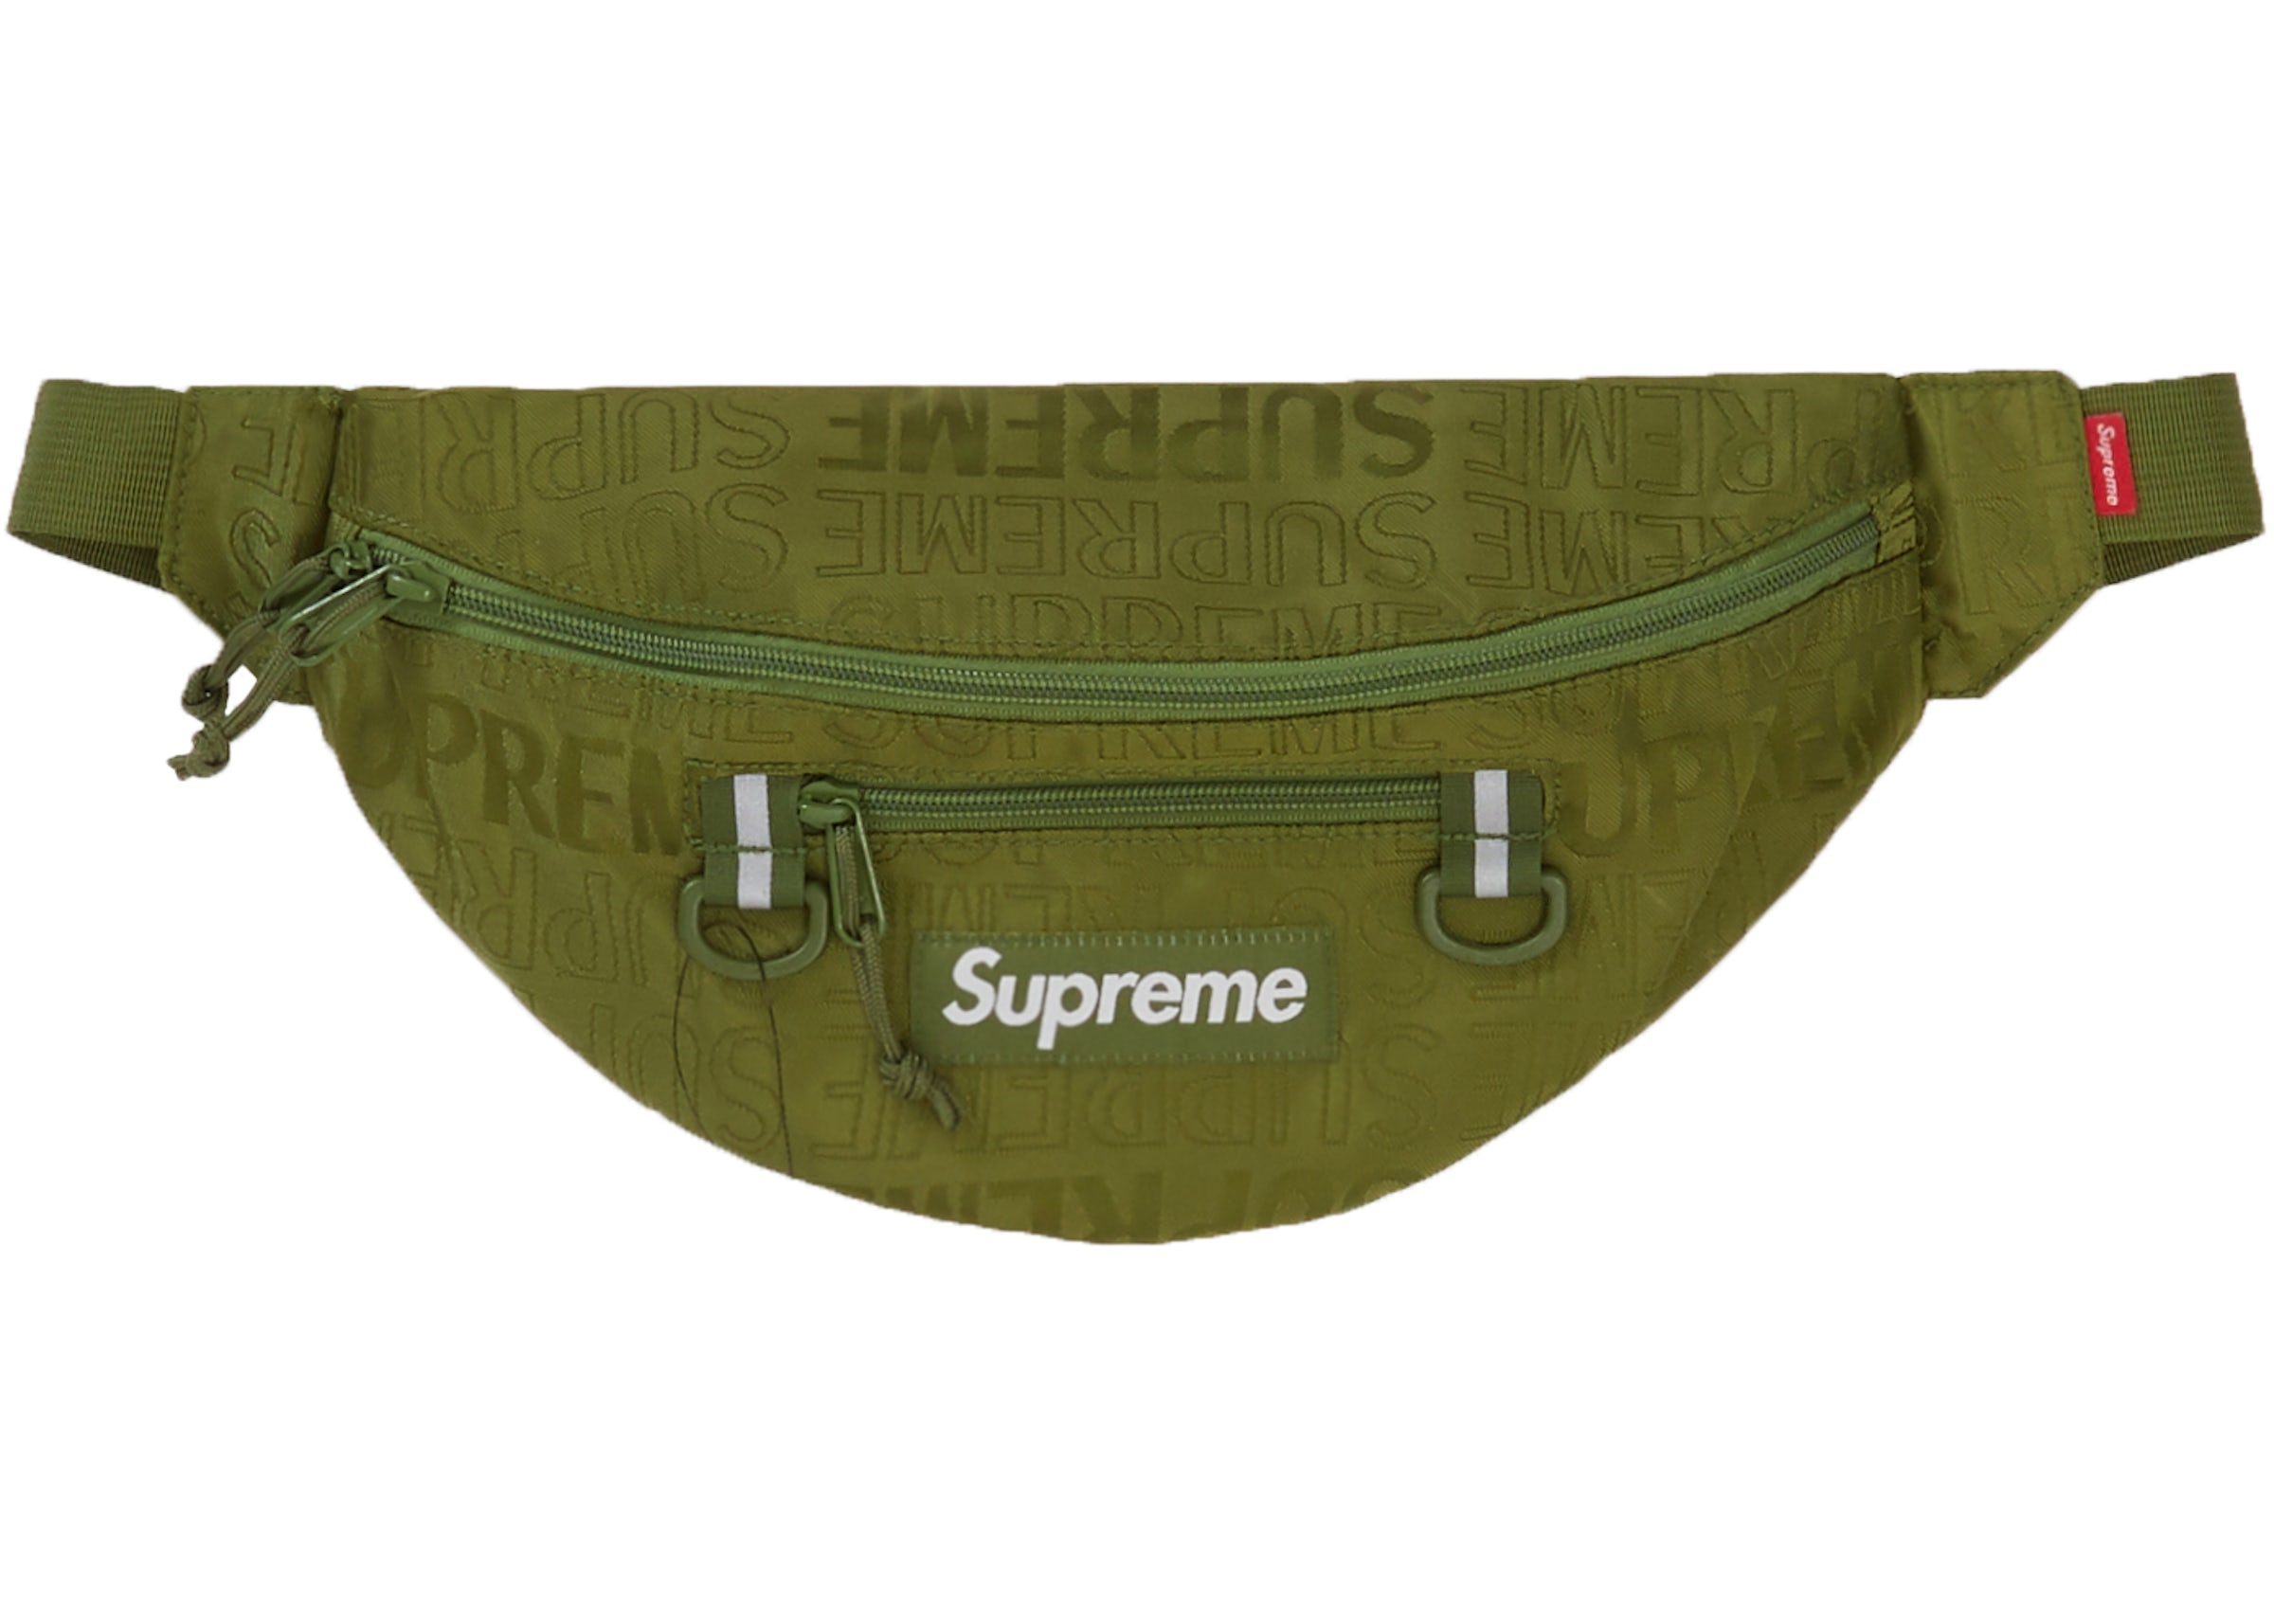 Supreme SS19 Waist Bag Red Review + Shower Cap 